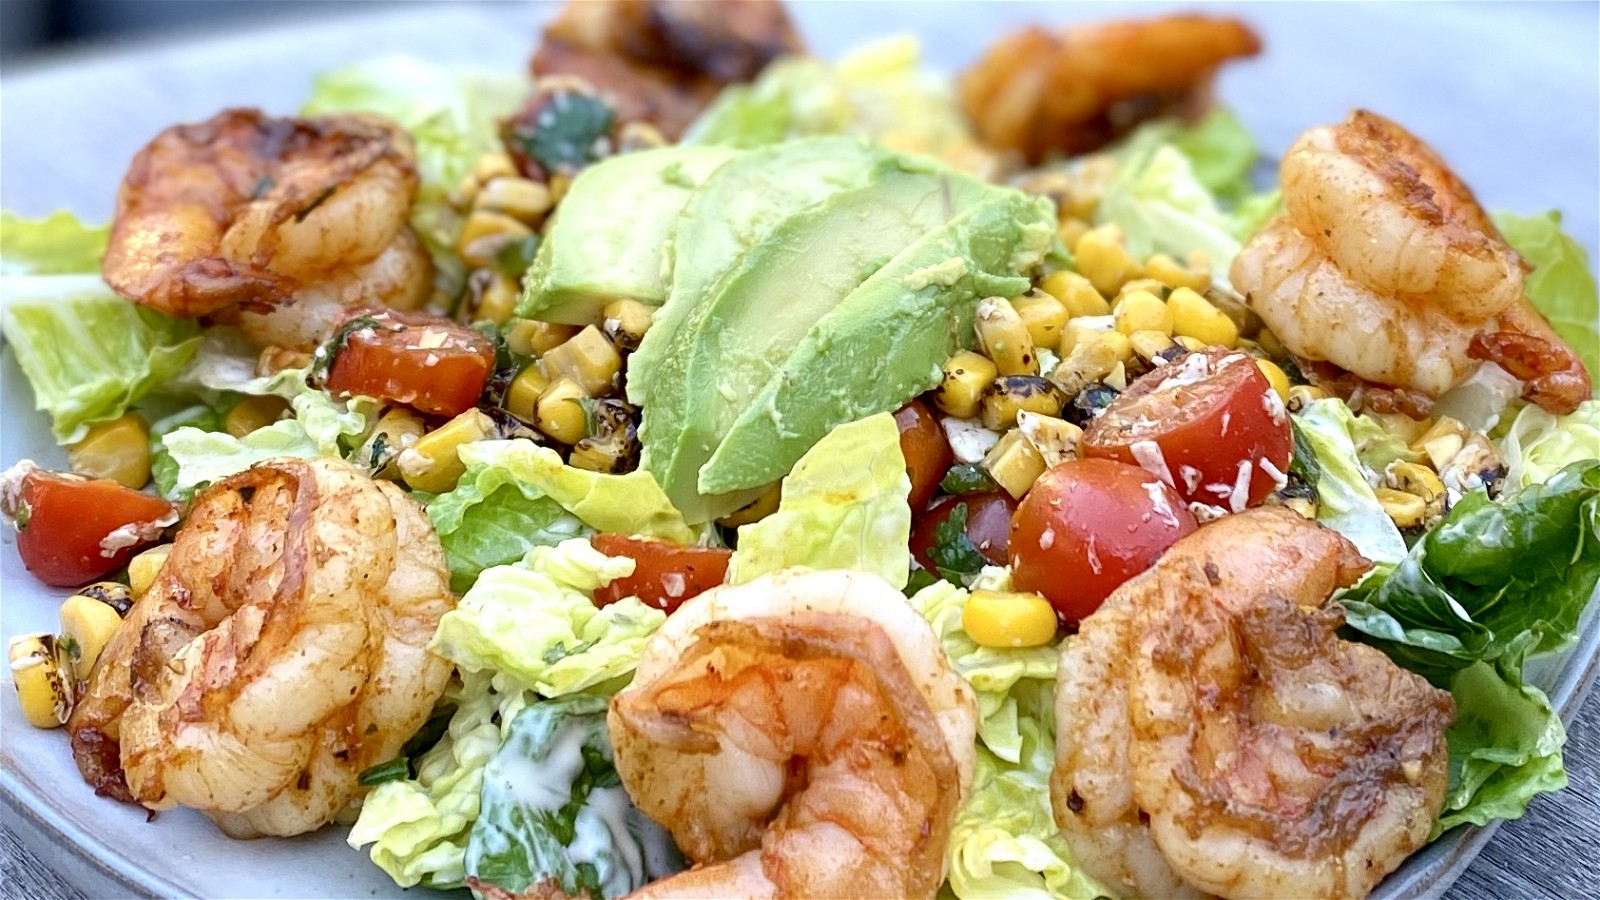 Image of Southwestern Taco Salad with Grilled Gulf Shrimp